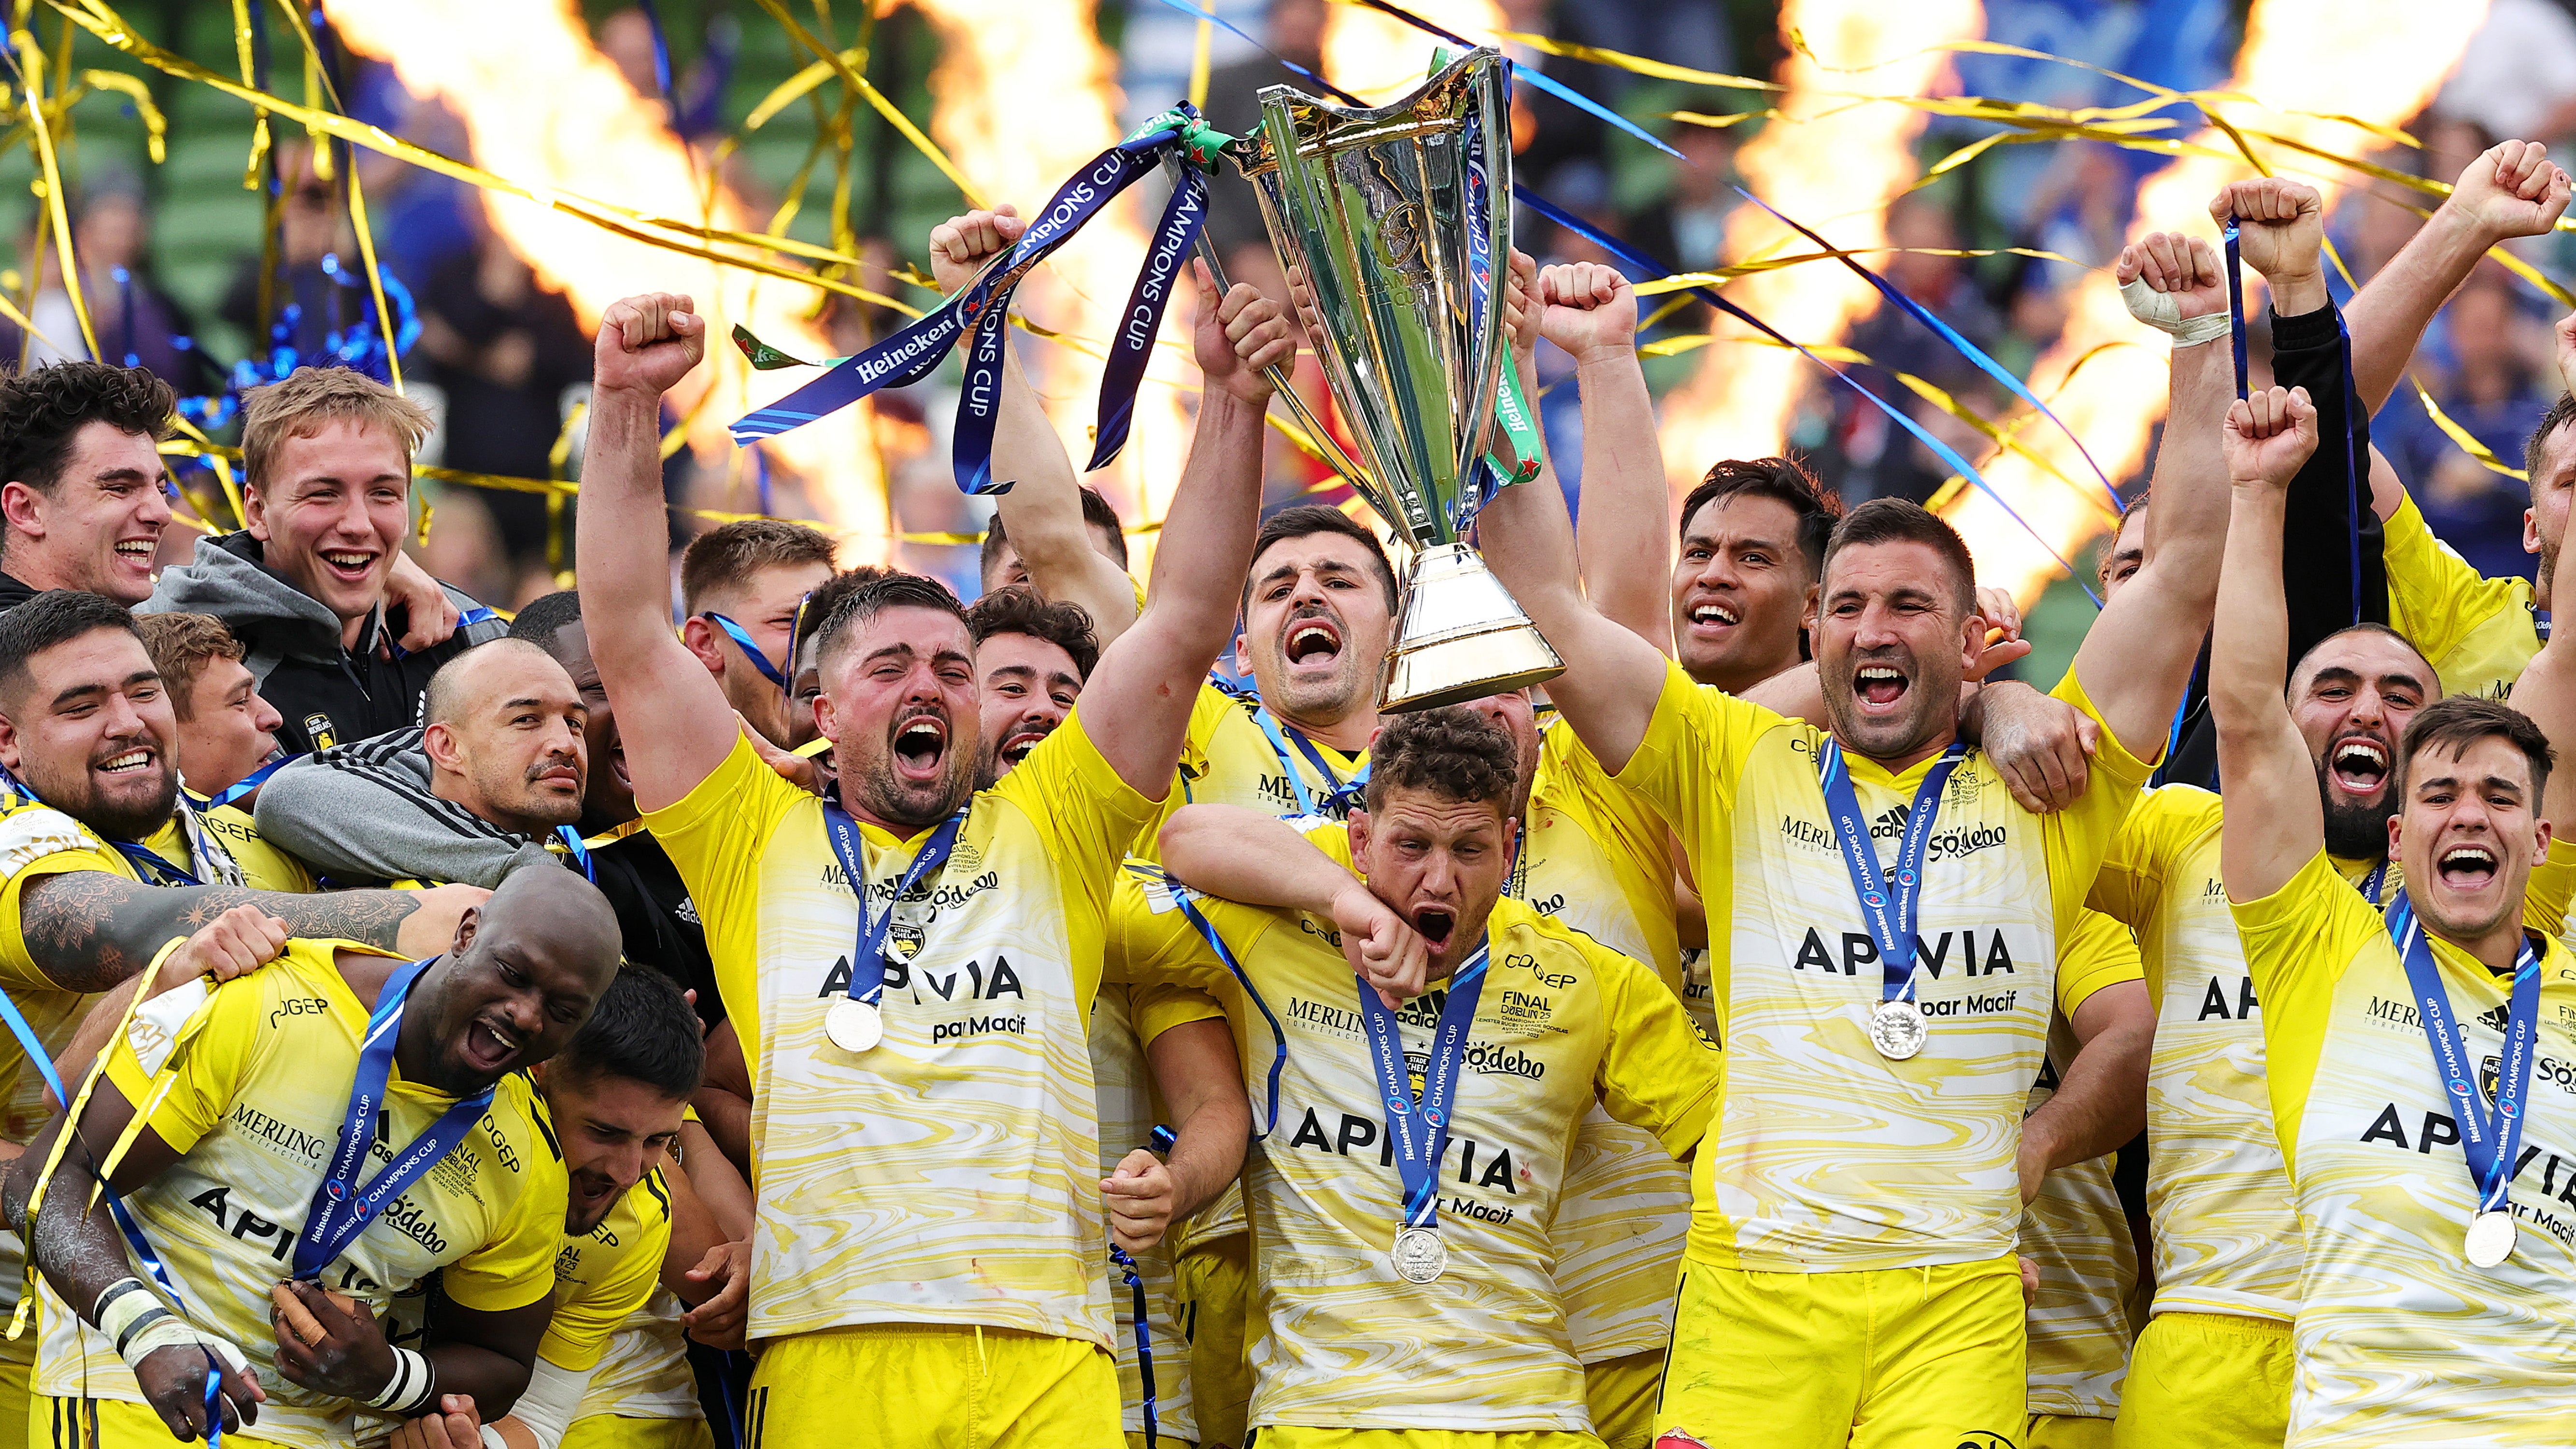 Alldritt has won back-to-back European Champions Cups with La Rochelle